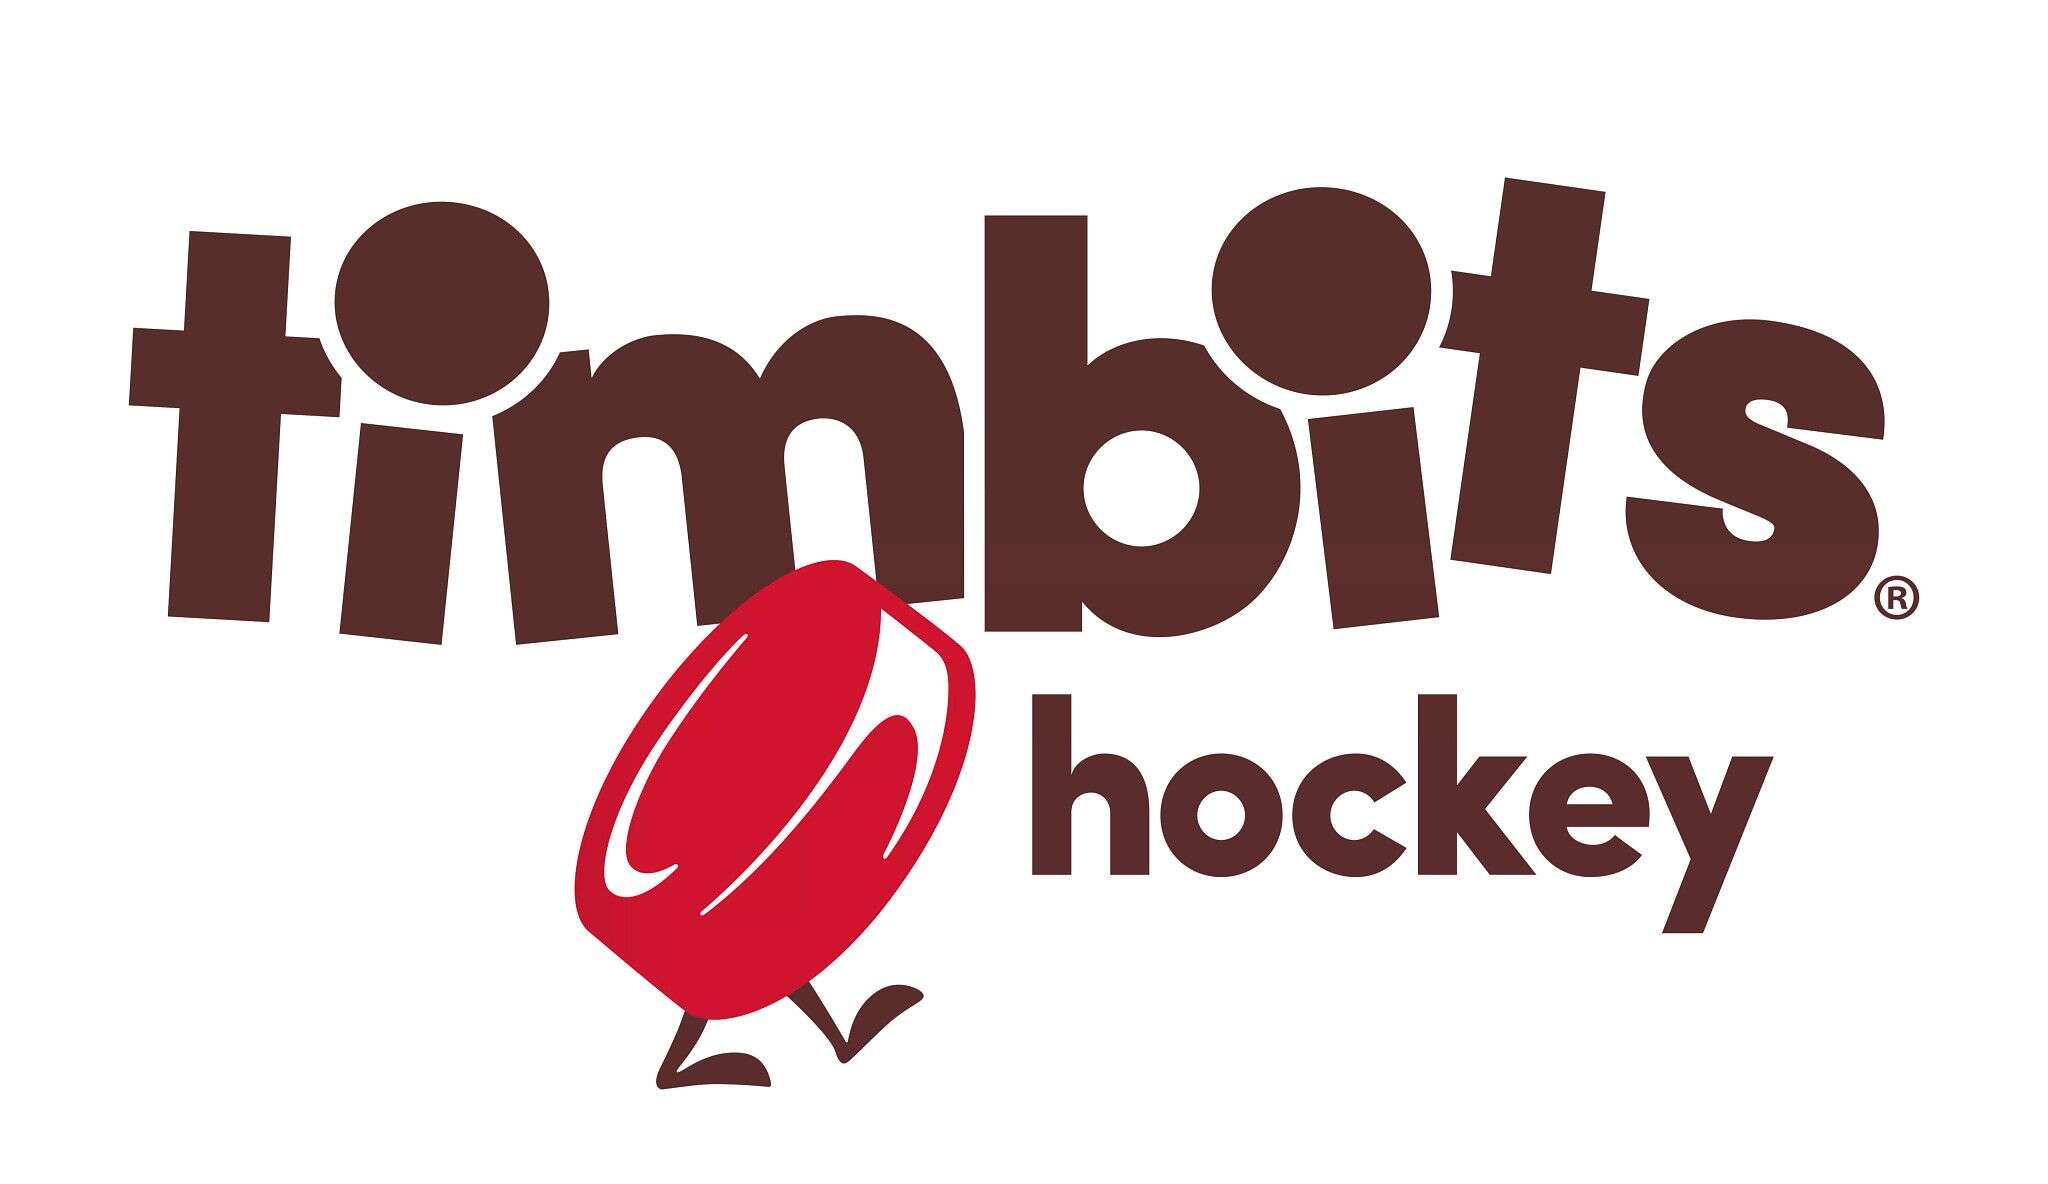 Tim Hortons - Timbits Hockey Program